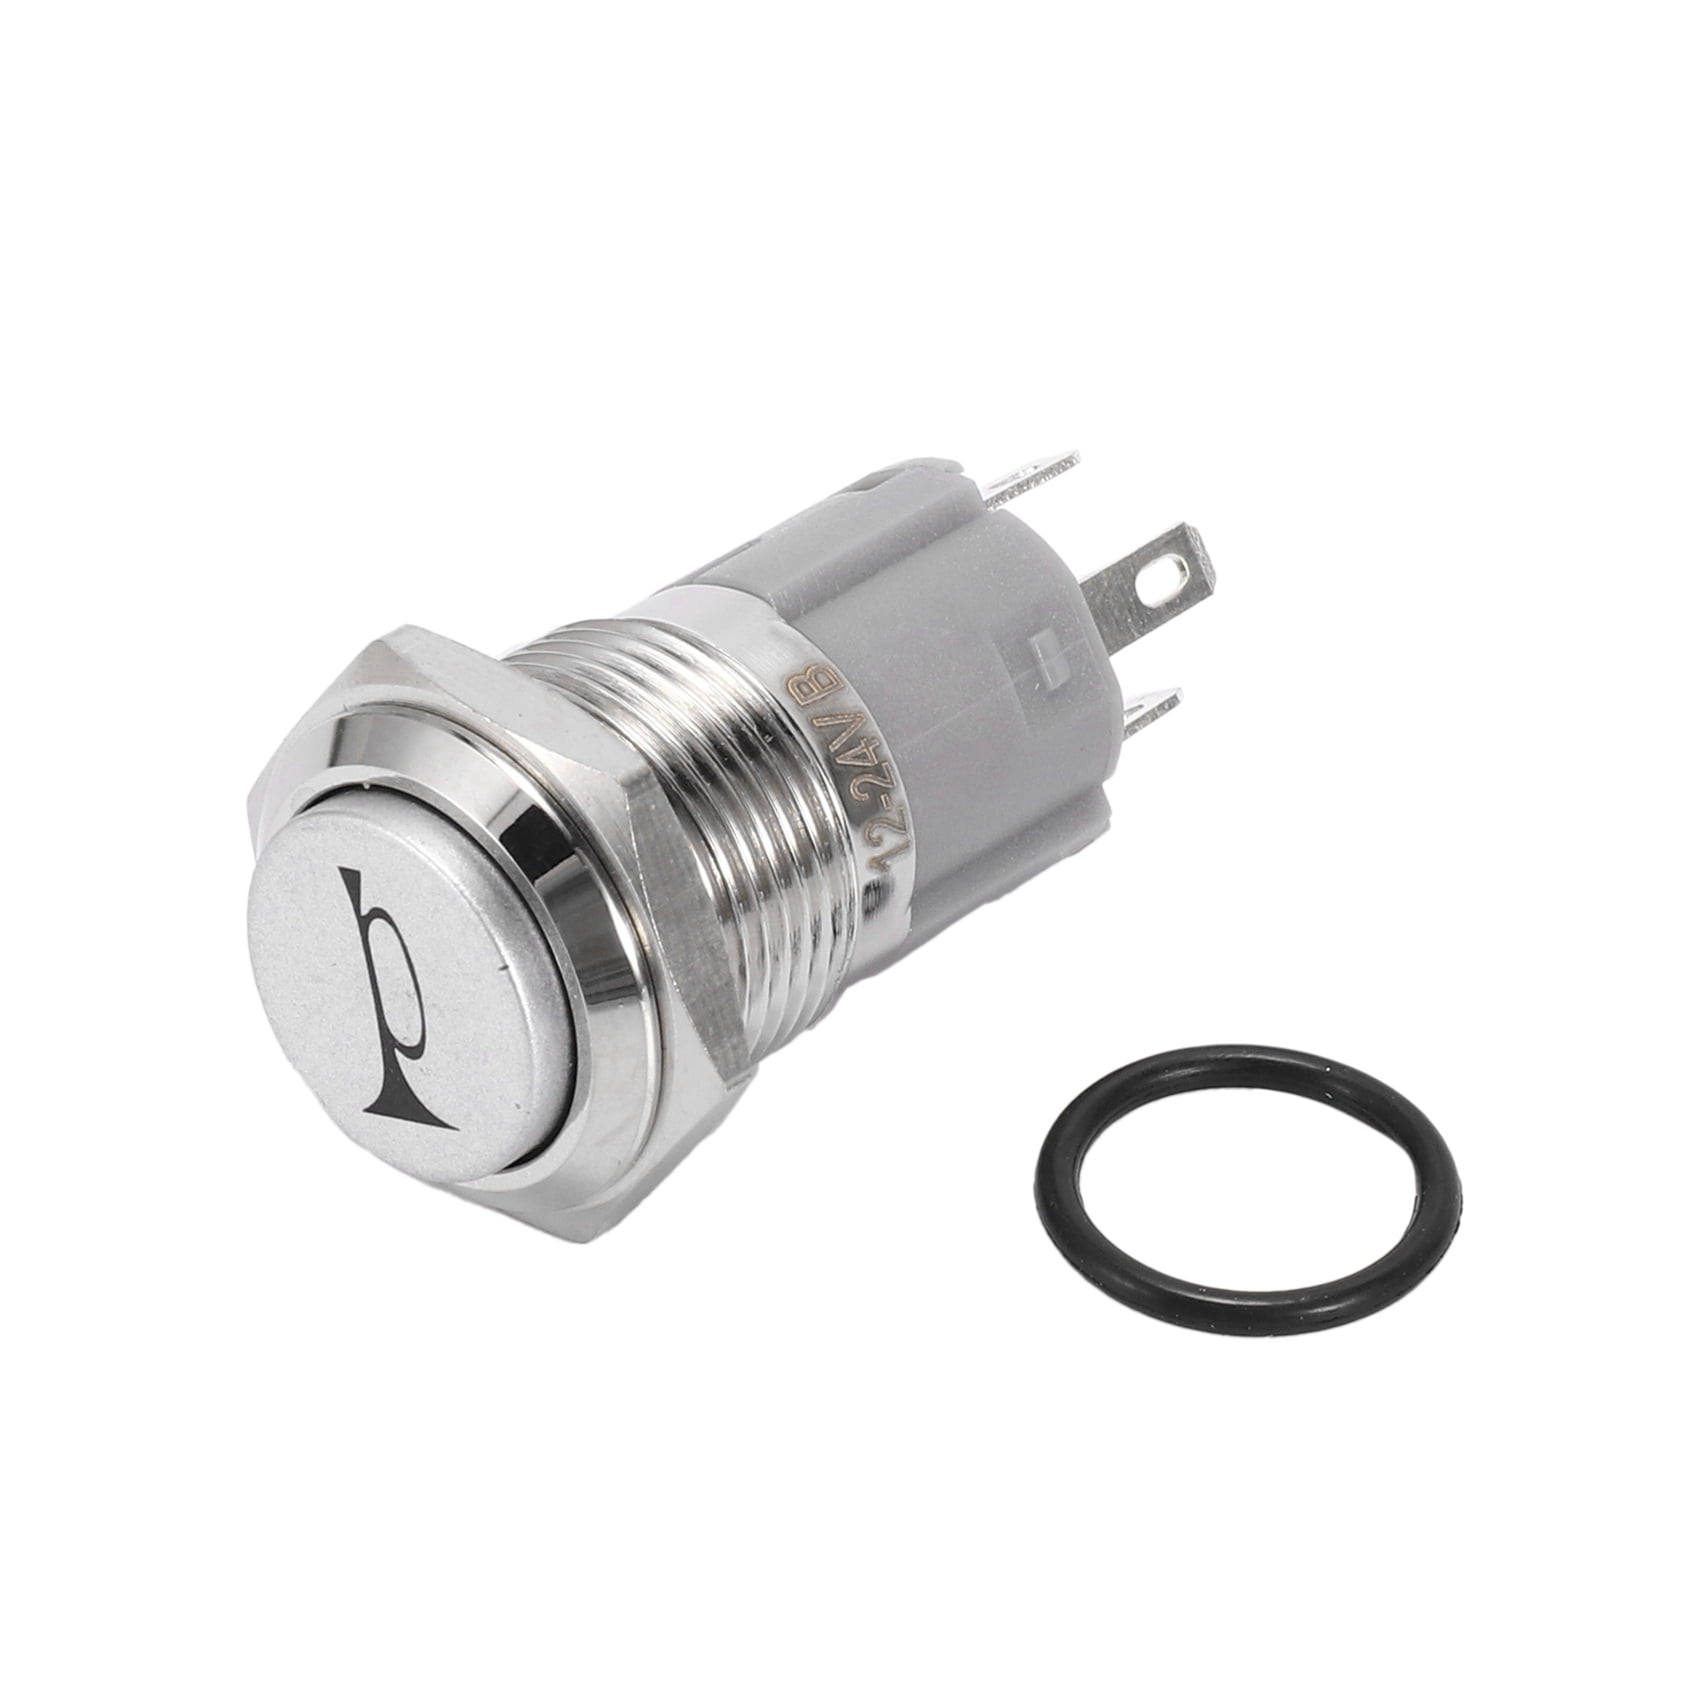 12V 16mm Momentary LED Marine Car Stainless Horn Push Button Light Switch 